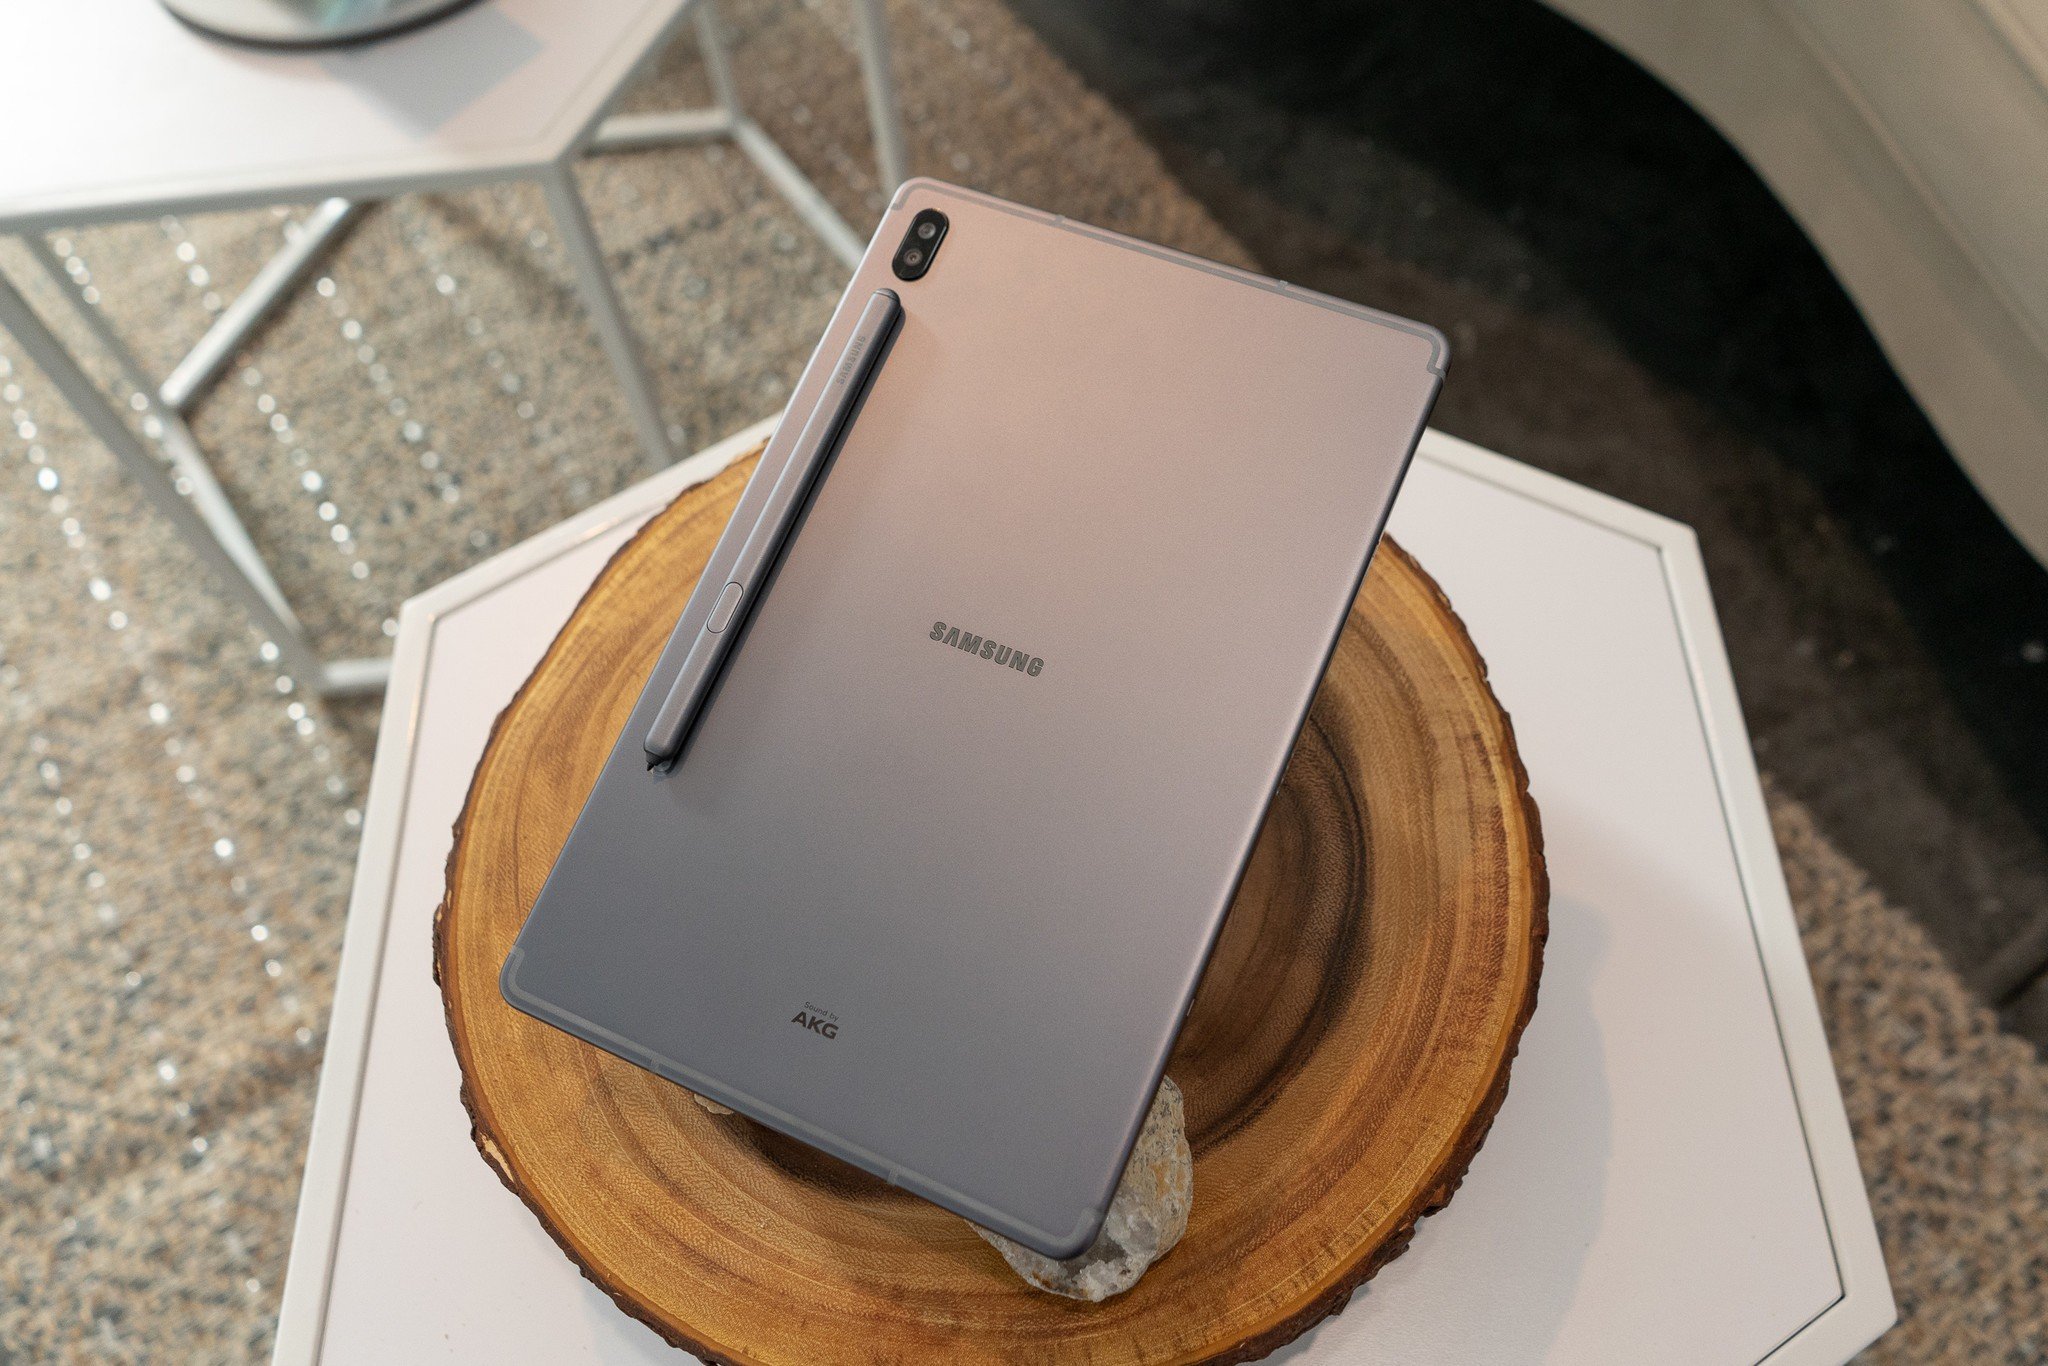 Samsung Galaxy Tab S6 Vs Tab S4 Should You Upgrade Android